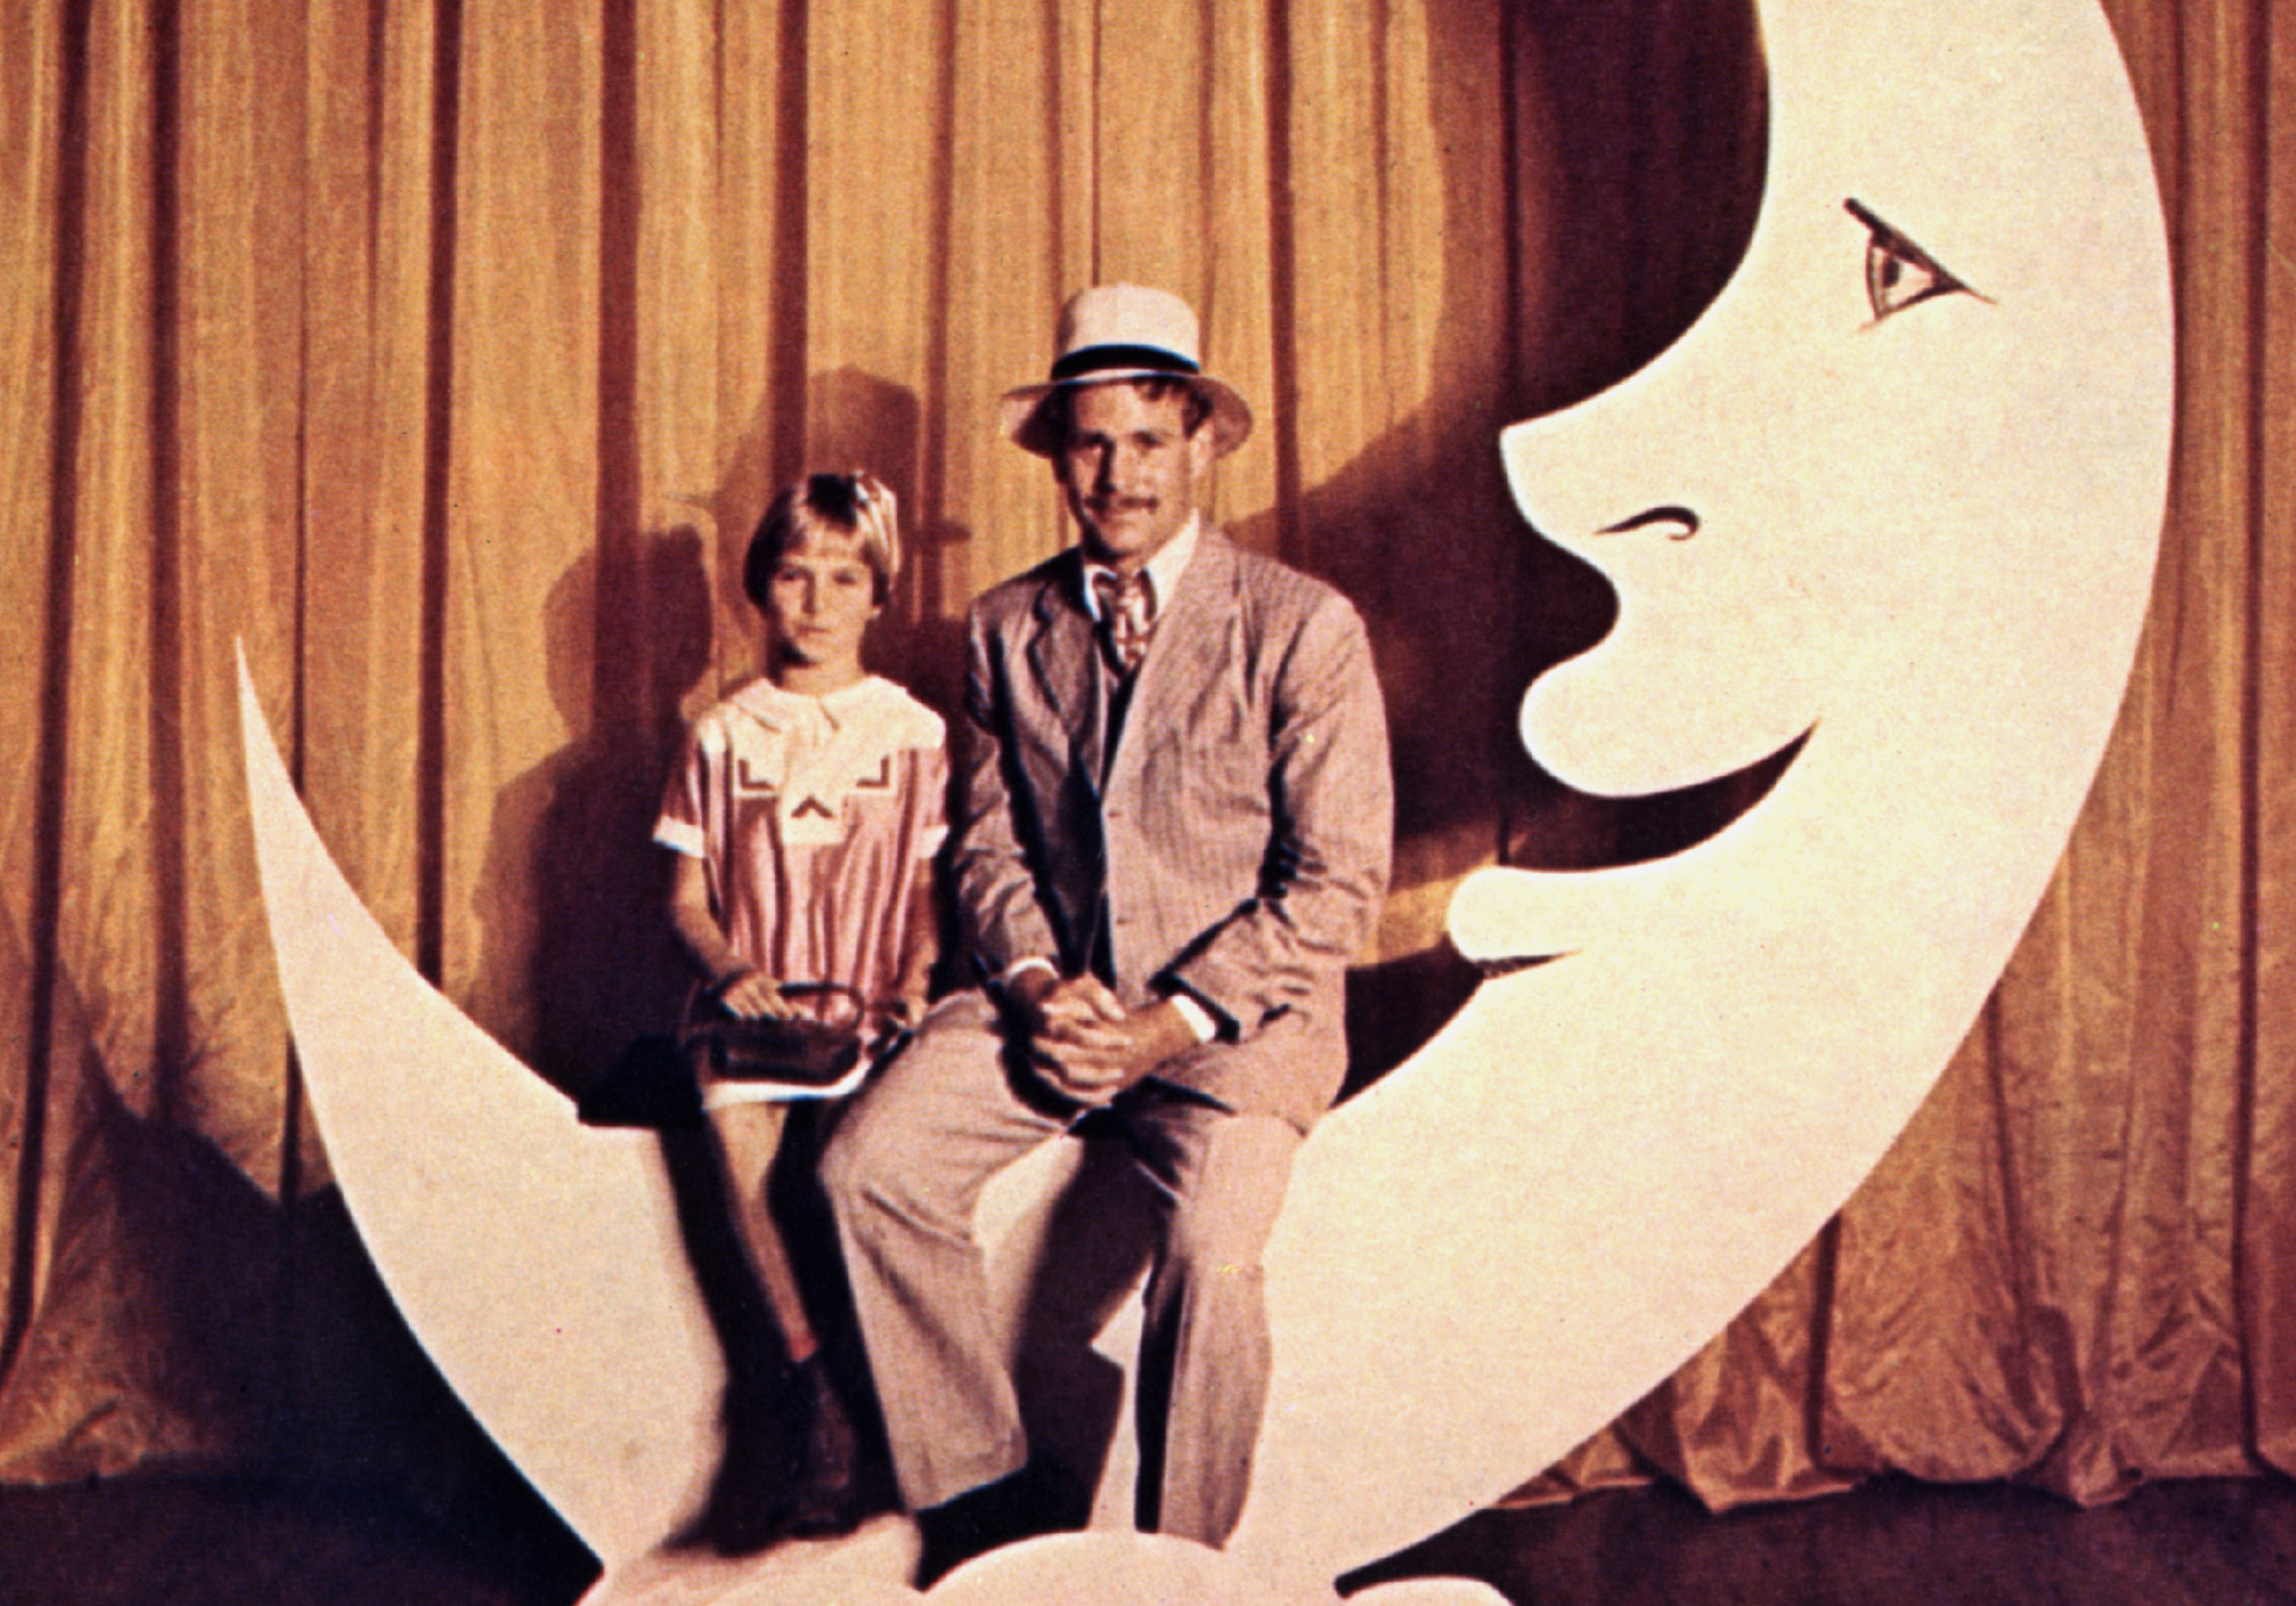 Tatum O'Neal et Ryan O'Neal dans "La Barbe à papa" vers 1973. | Source : Getty Images